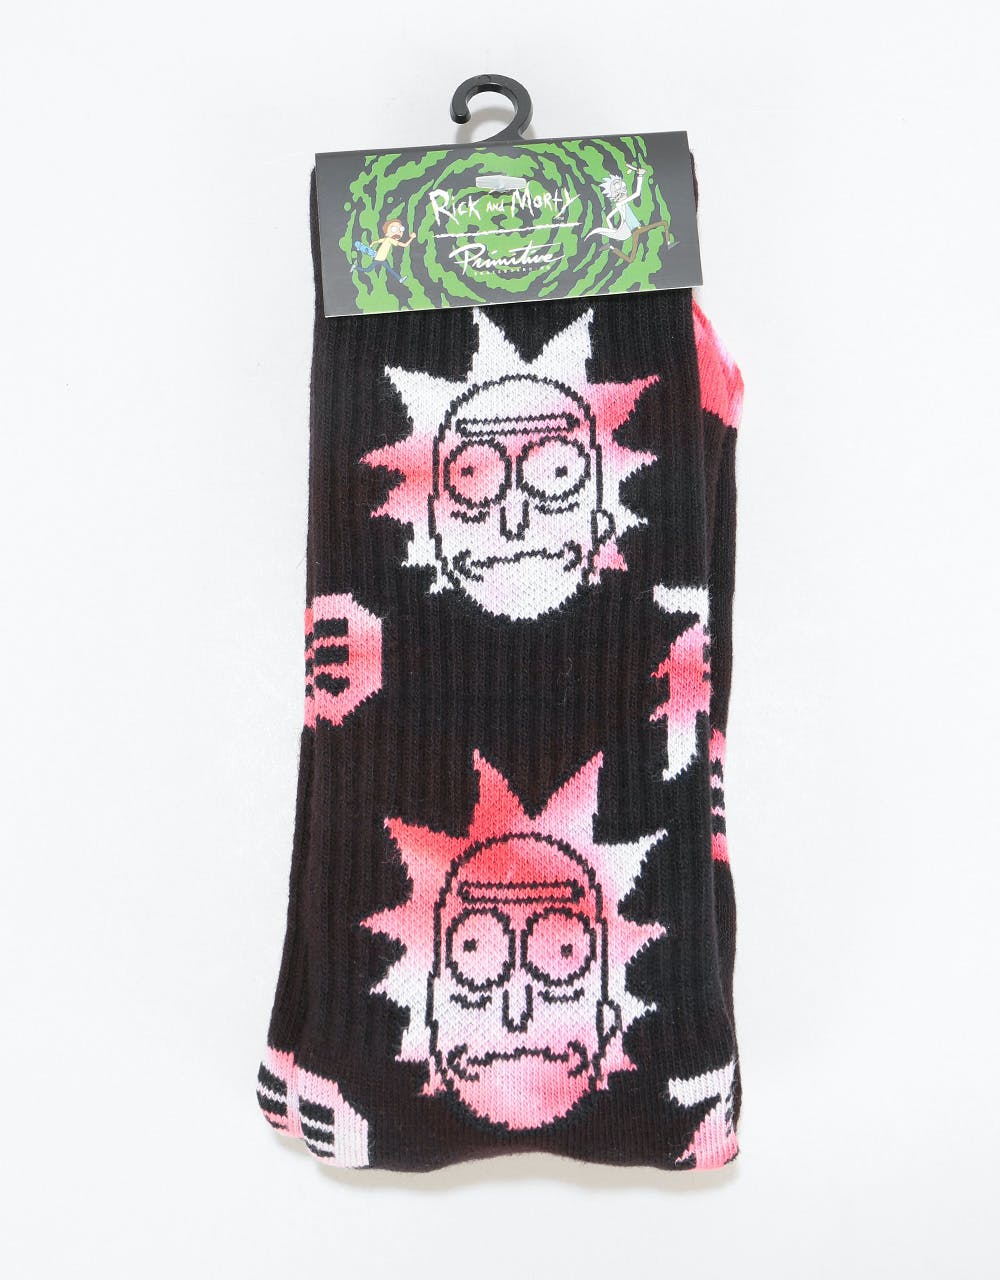 Primitive x Rick & Morty RnM Crew Socks - Pink Tie Dye